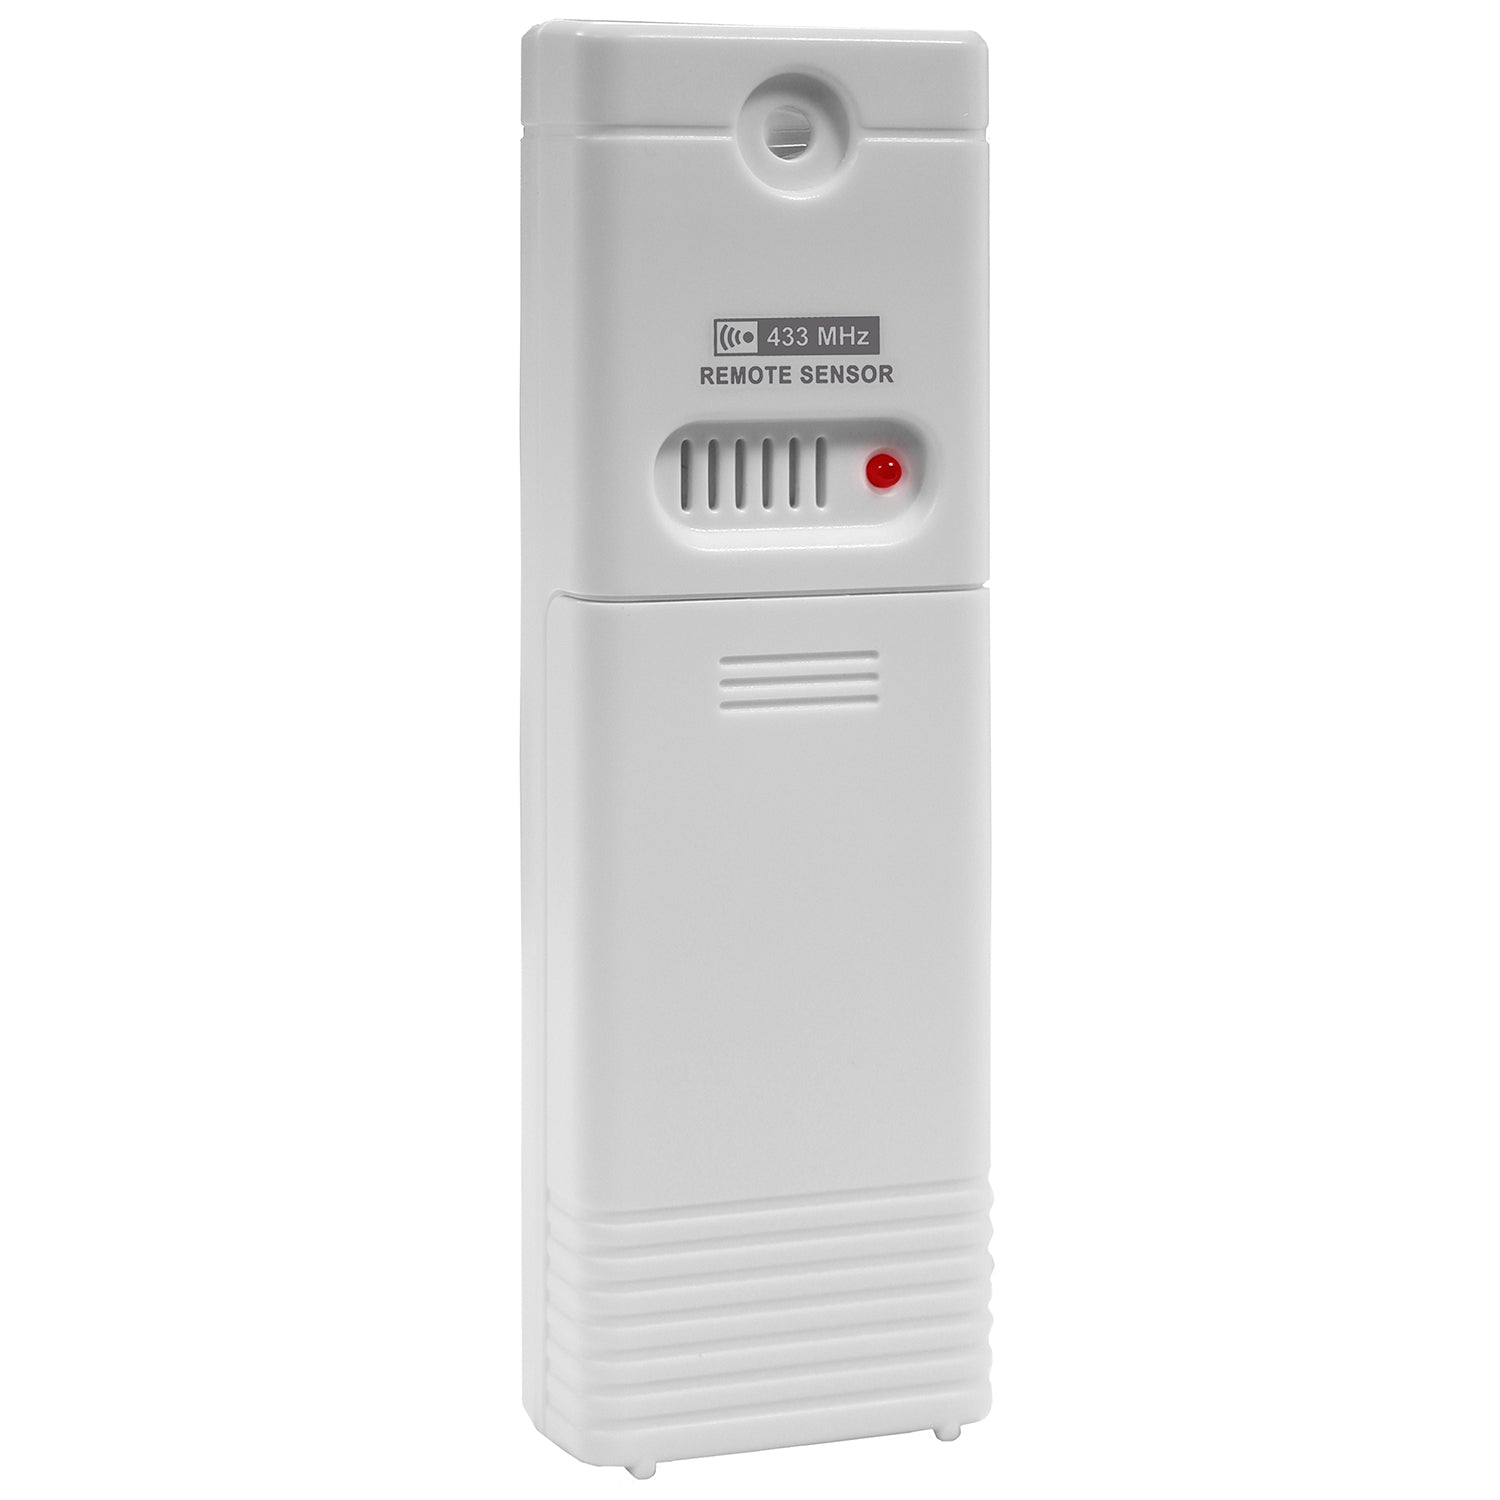 TX141 Wireless Temperature Sensor – La Crosse Technology